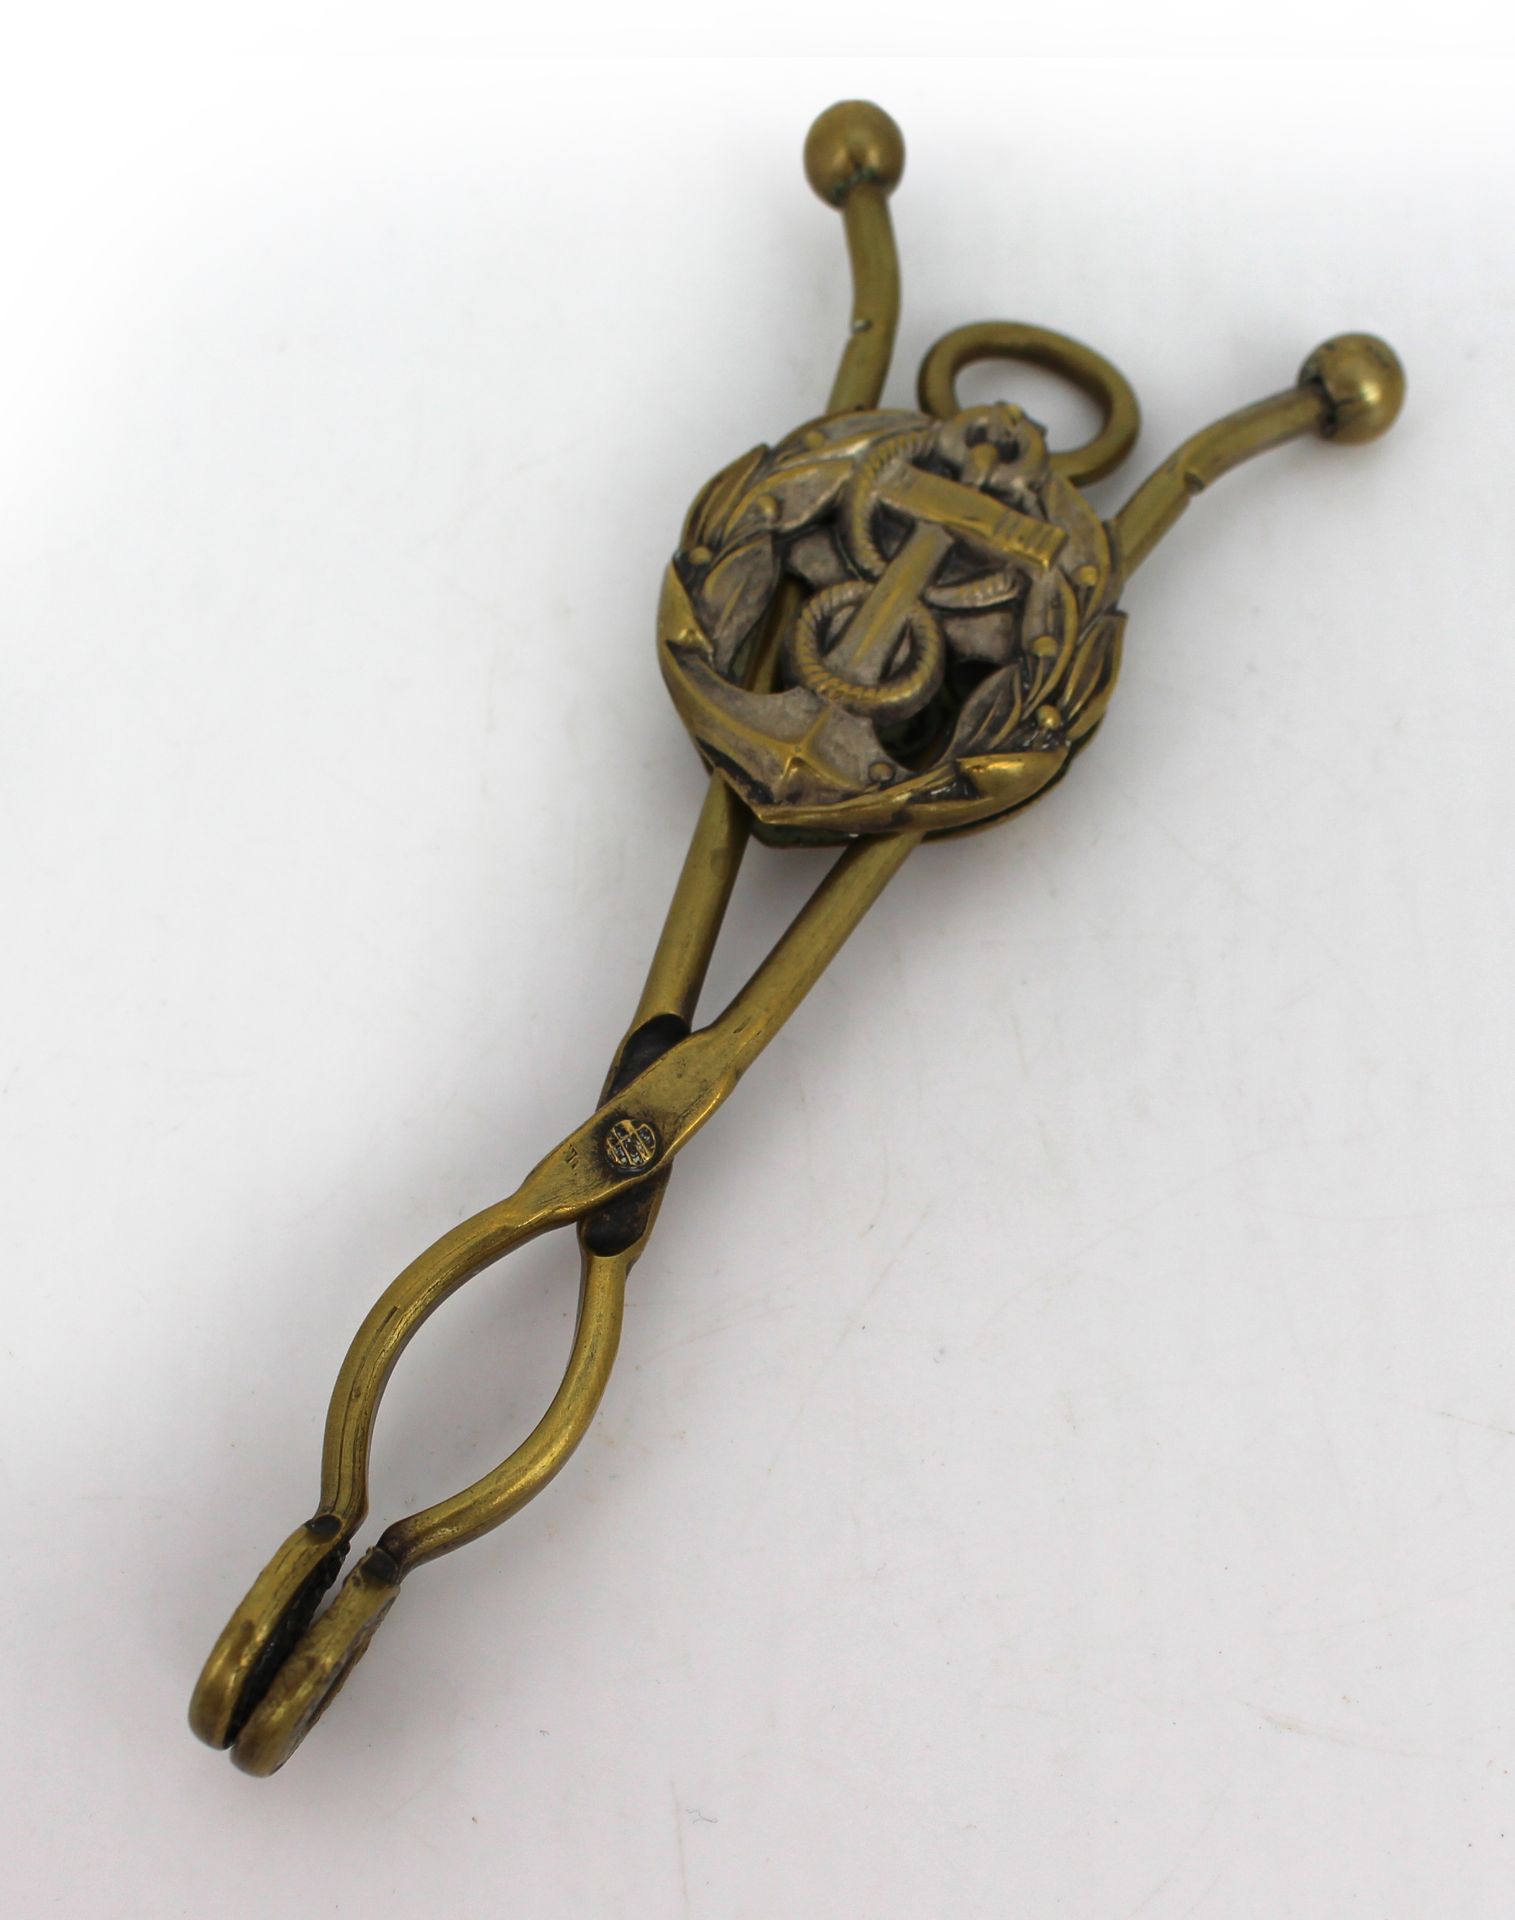 Antique Brass Patent - Image 2 of 3